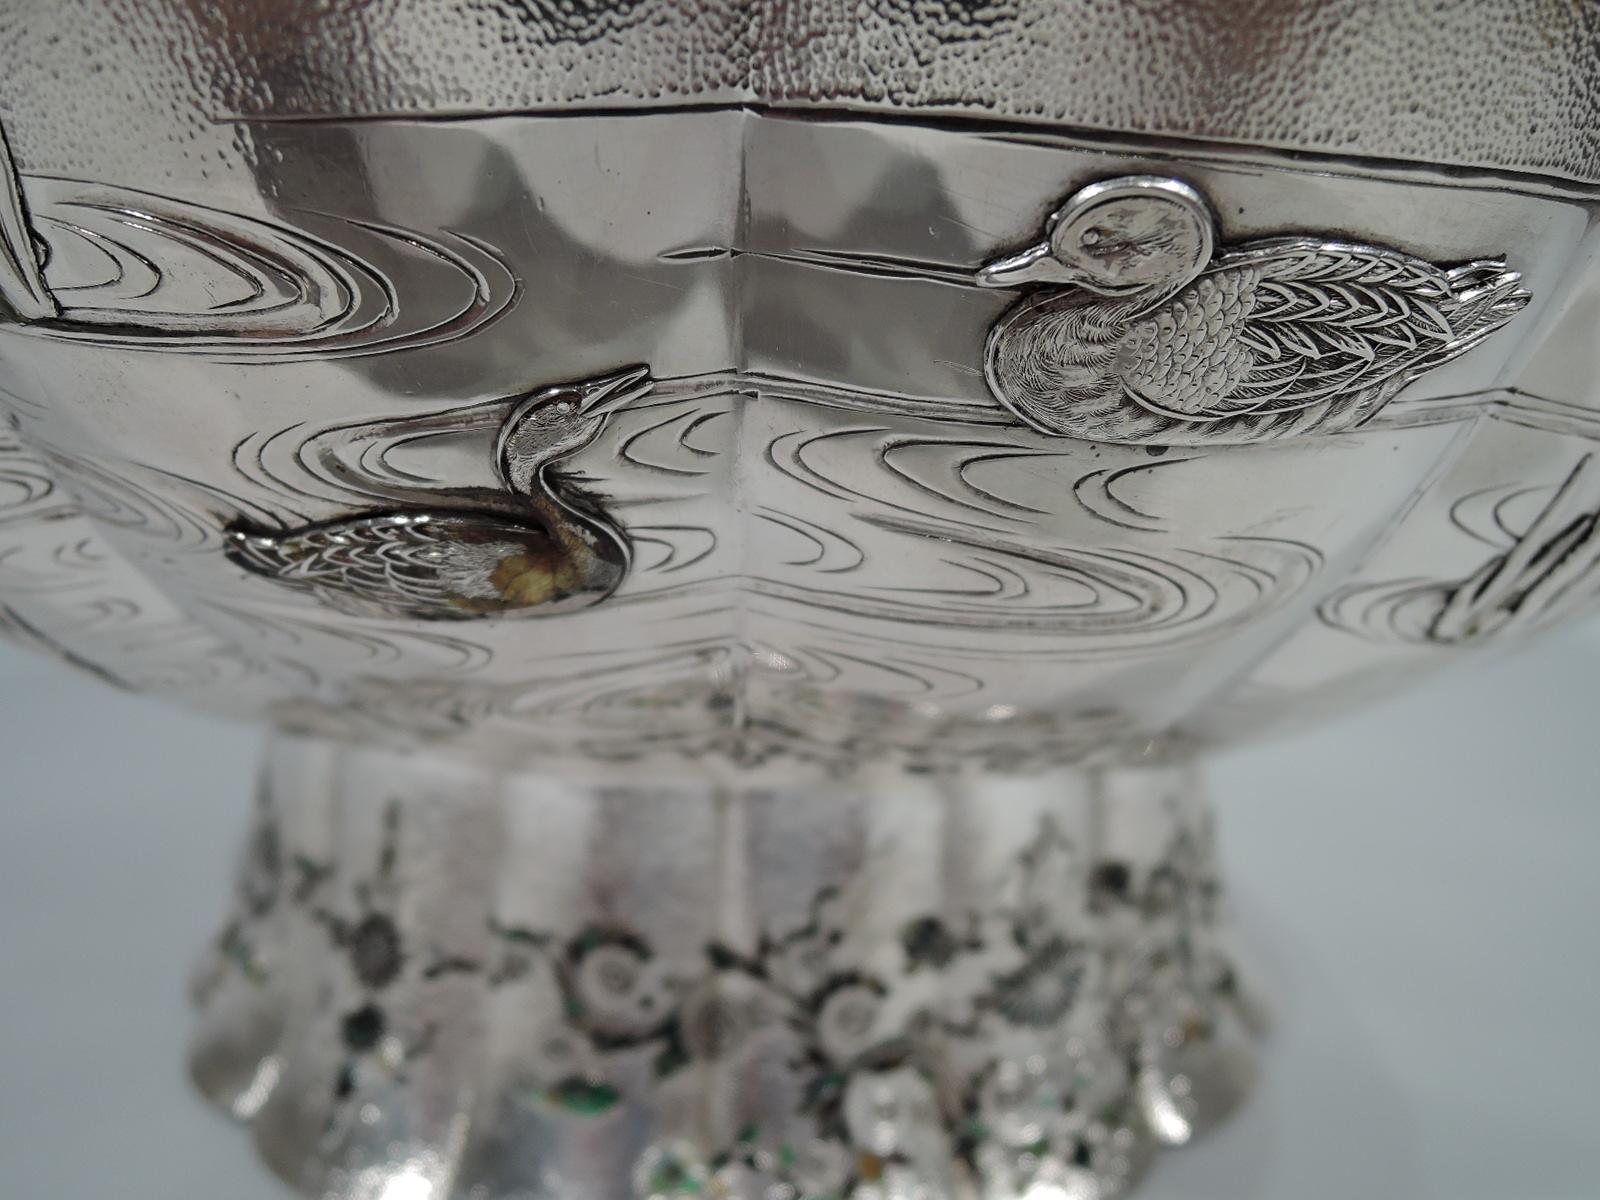 Antique Japanese Silver and Enamel Centerpiece Bowl wtih World's Fair Provenance 1